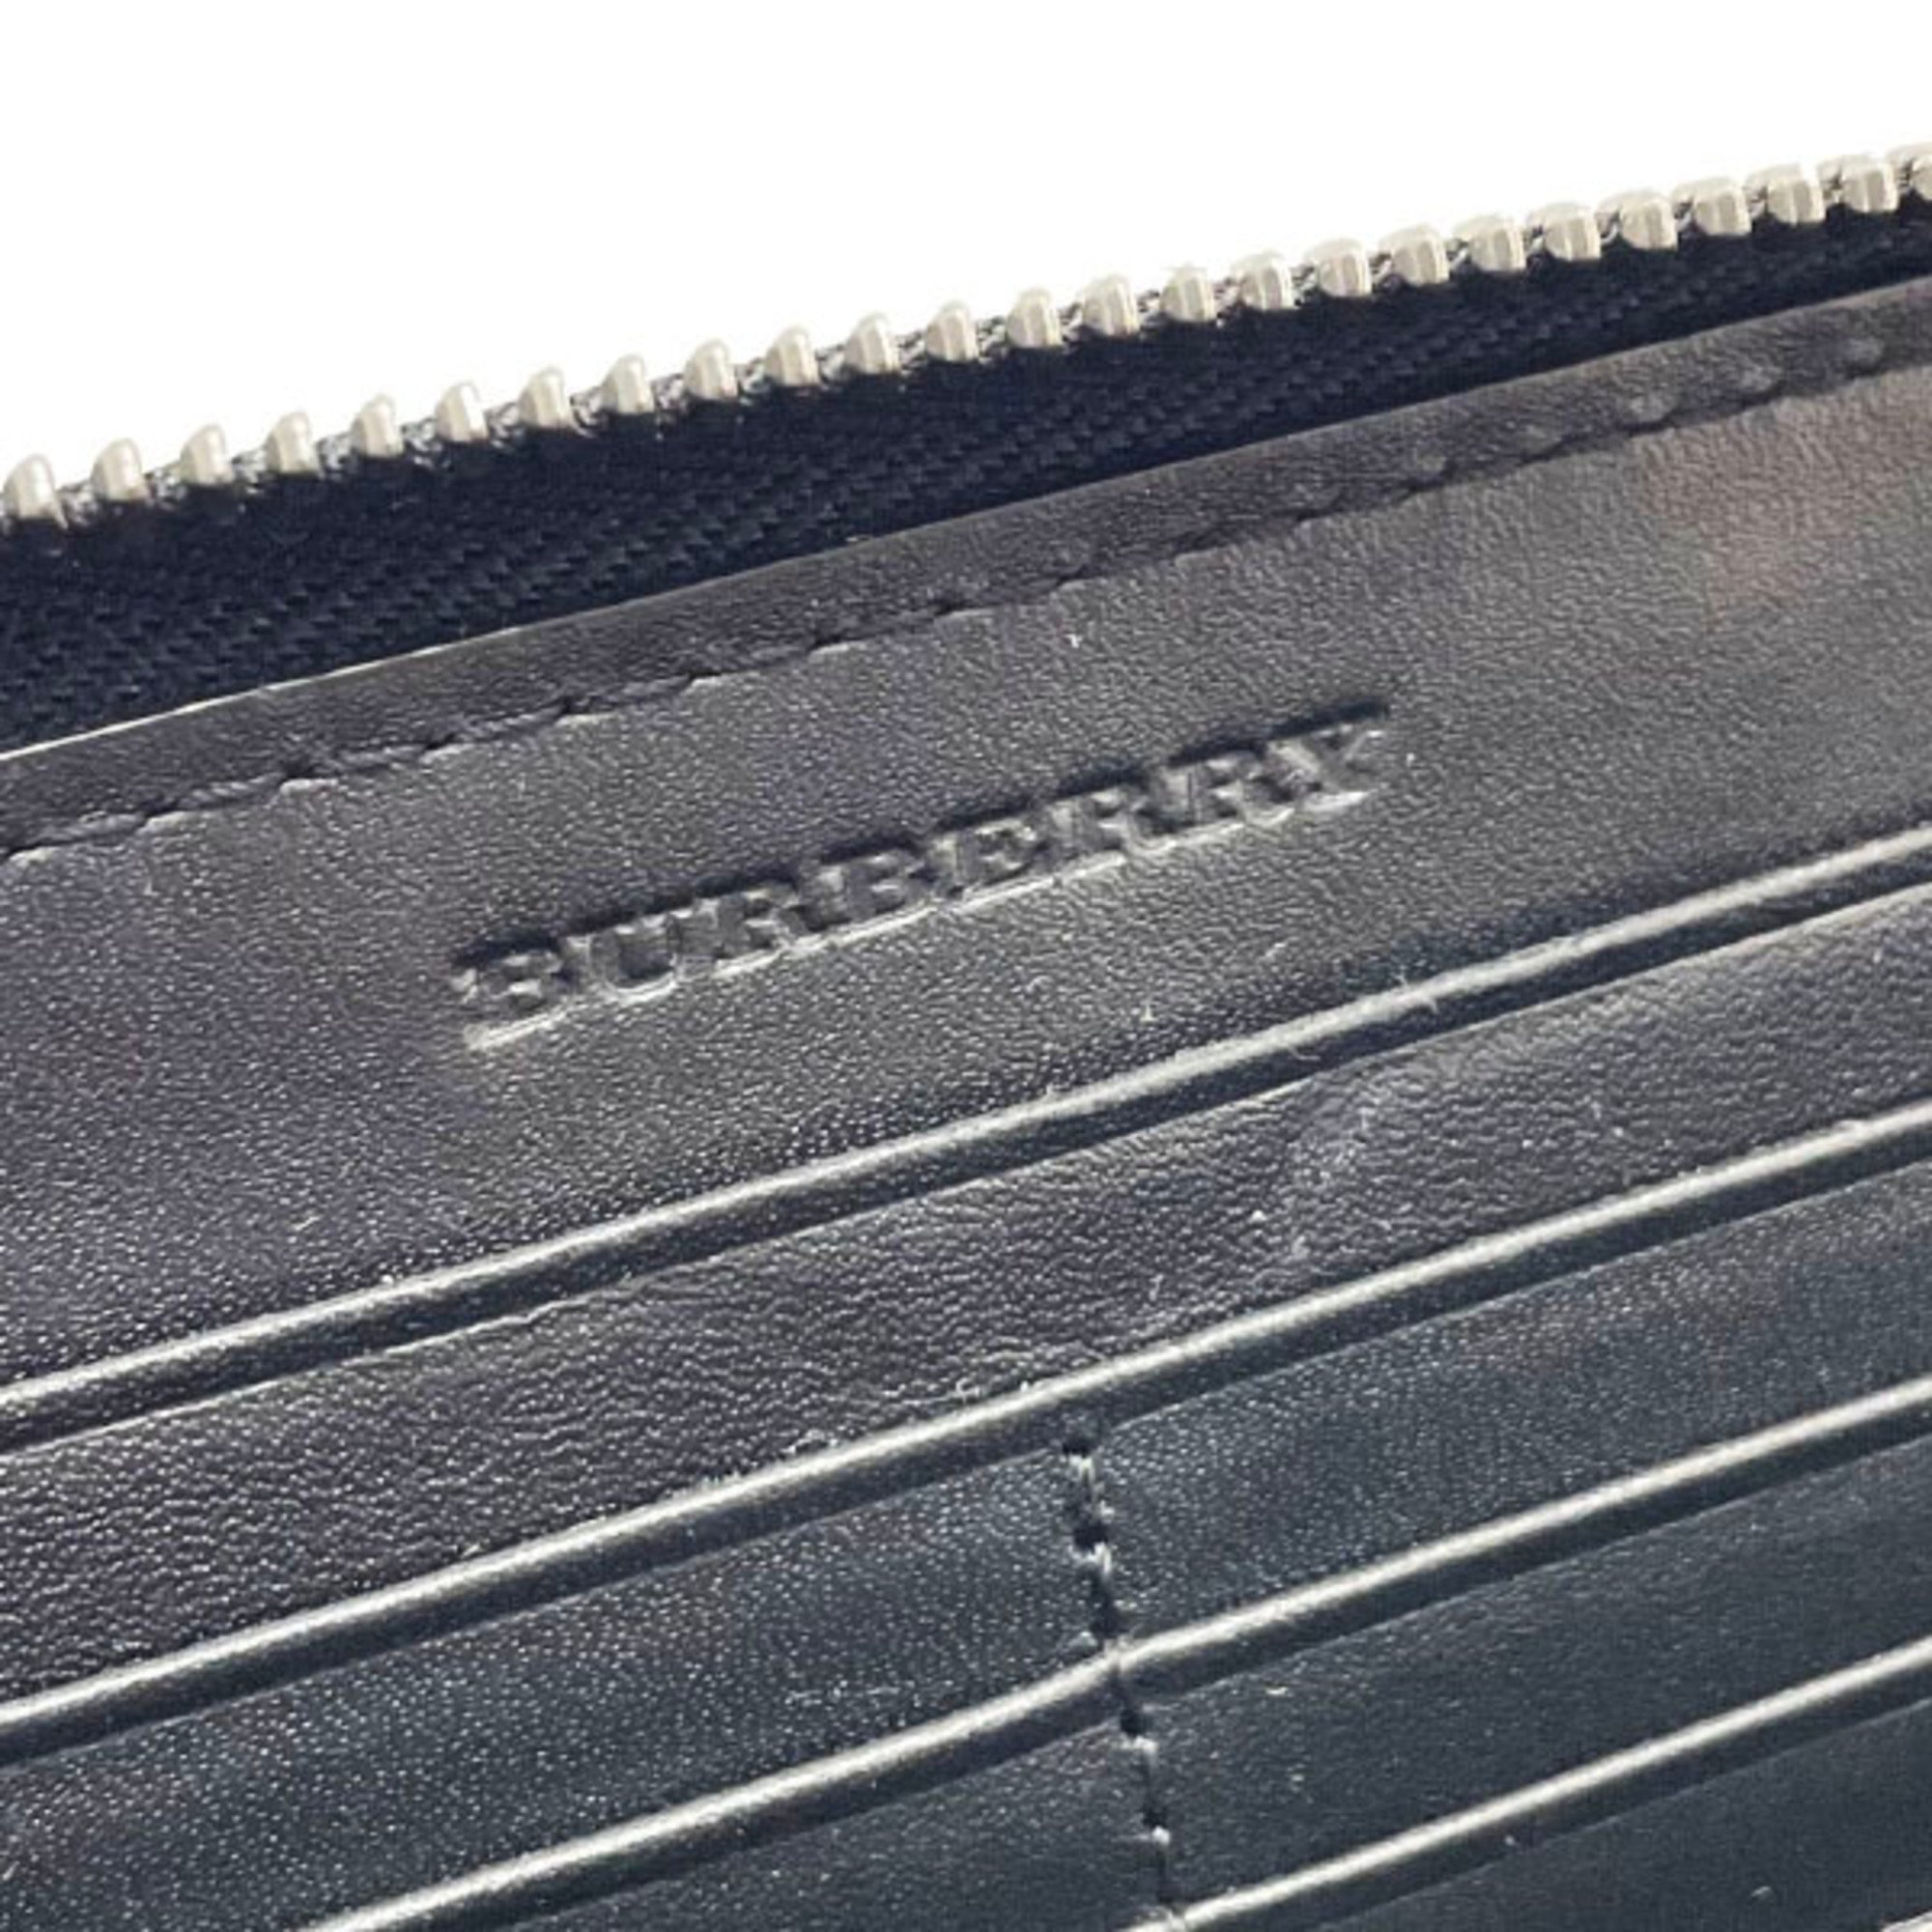 Burberry Long Wallet Check Round PVC Leather Black BURBERRY Organizer Travel Case Men's NN-13168